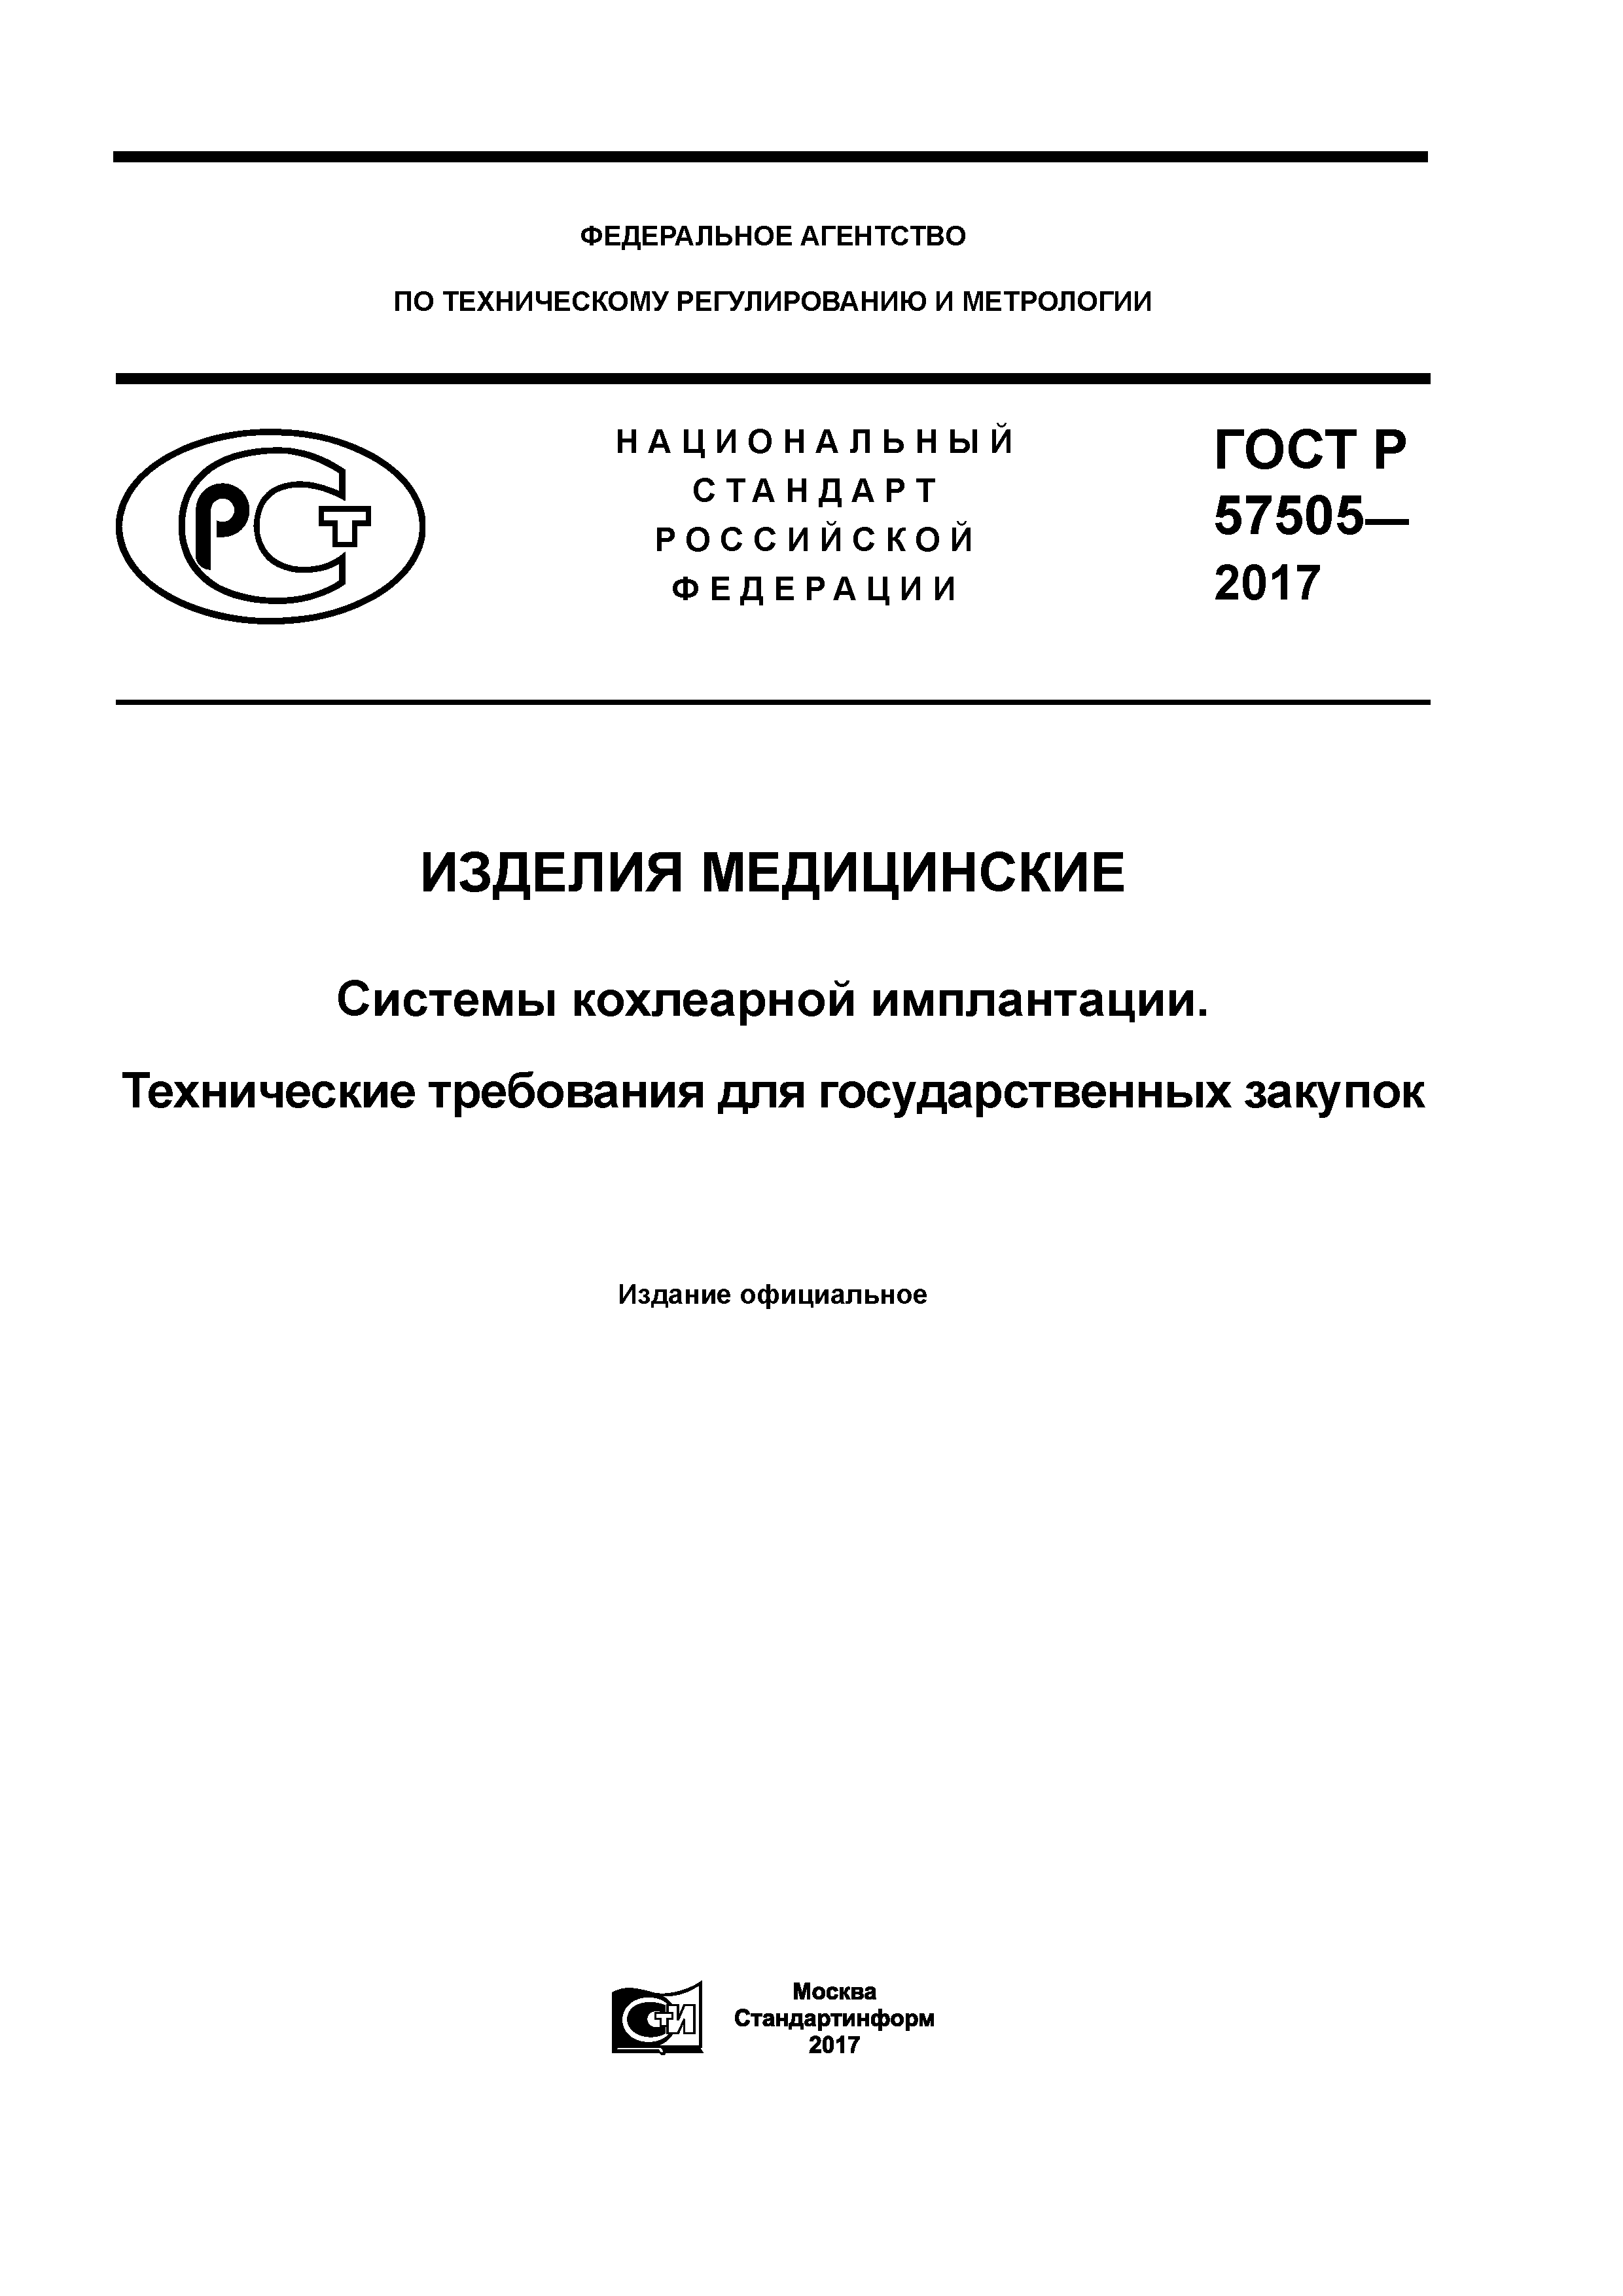 ГОСТ Р 57505-2017